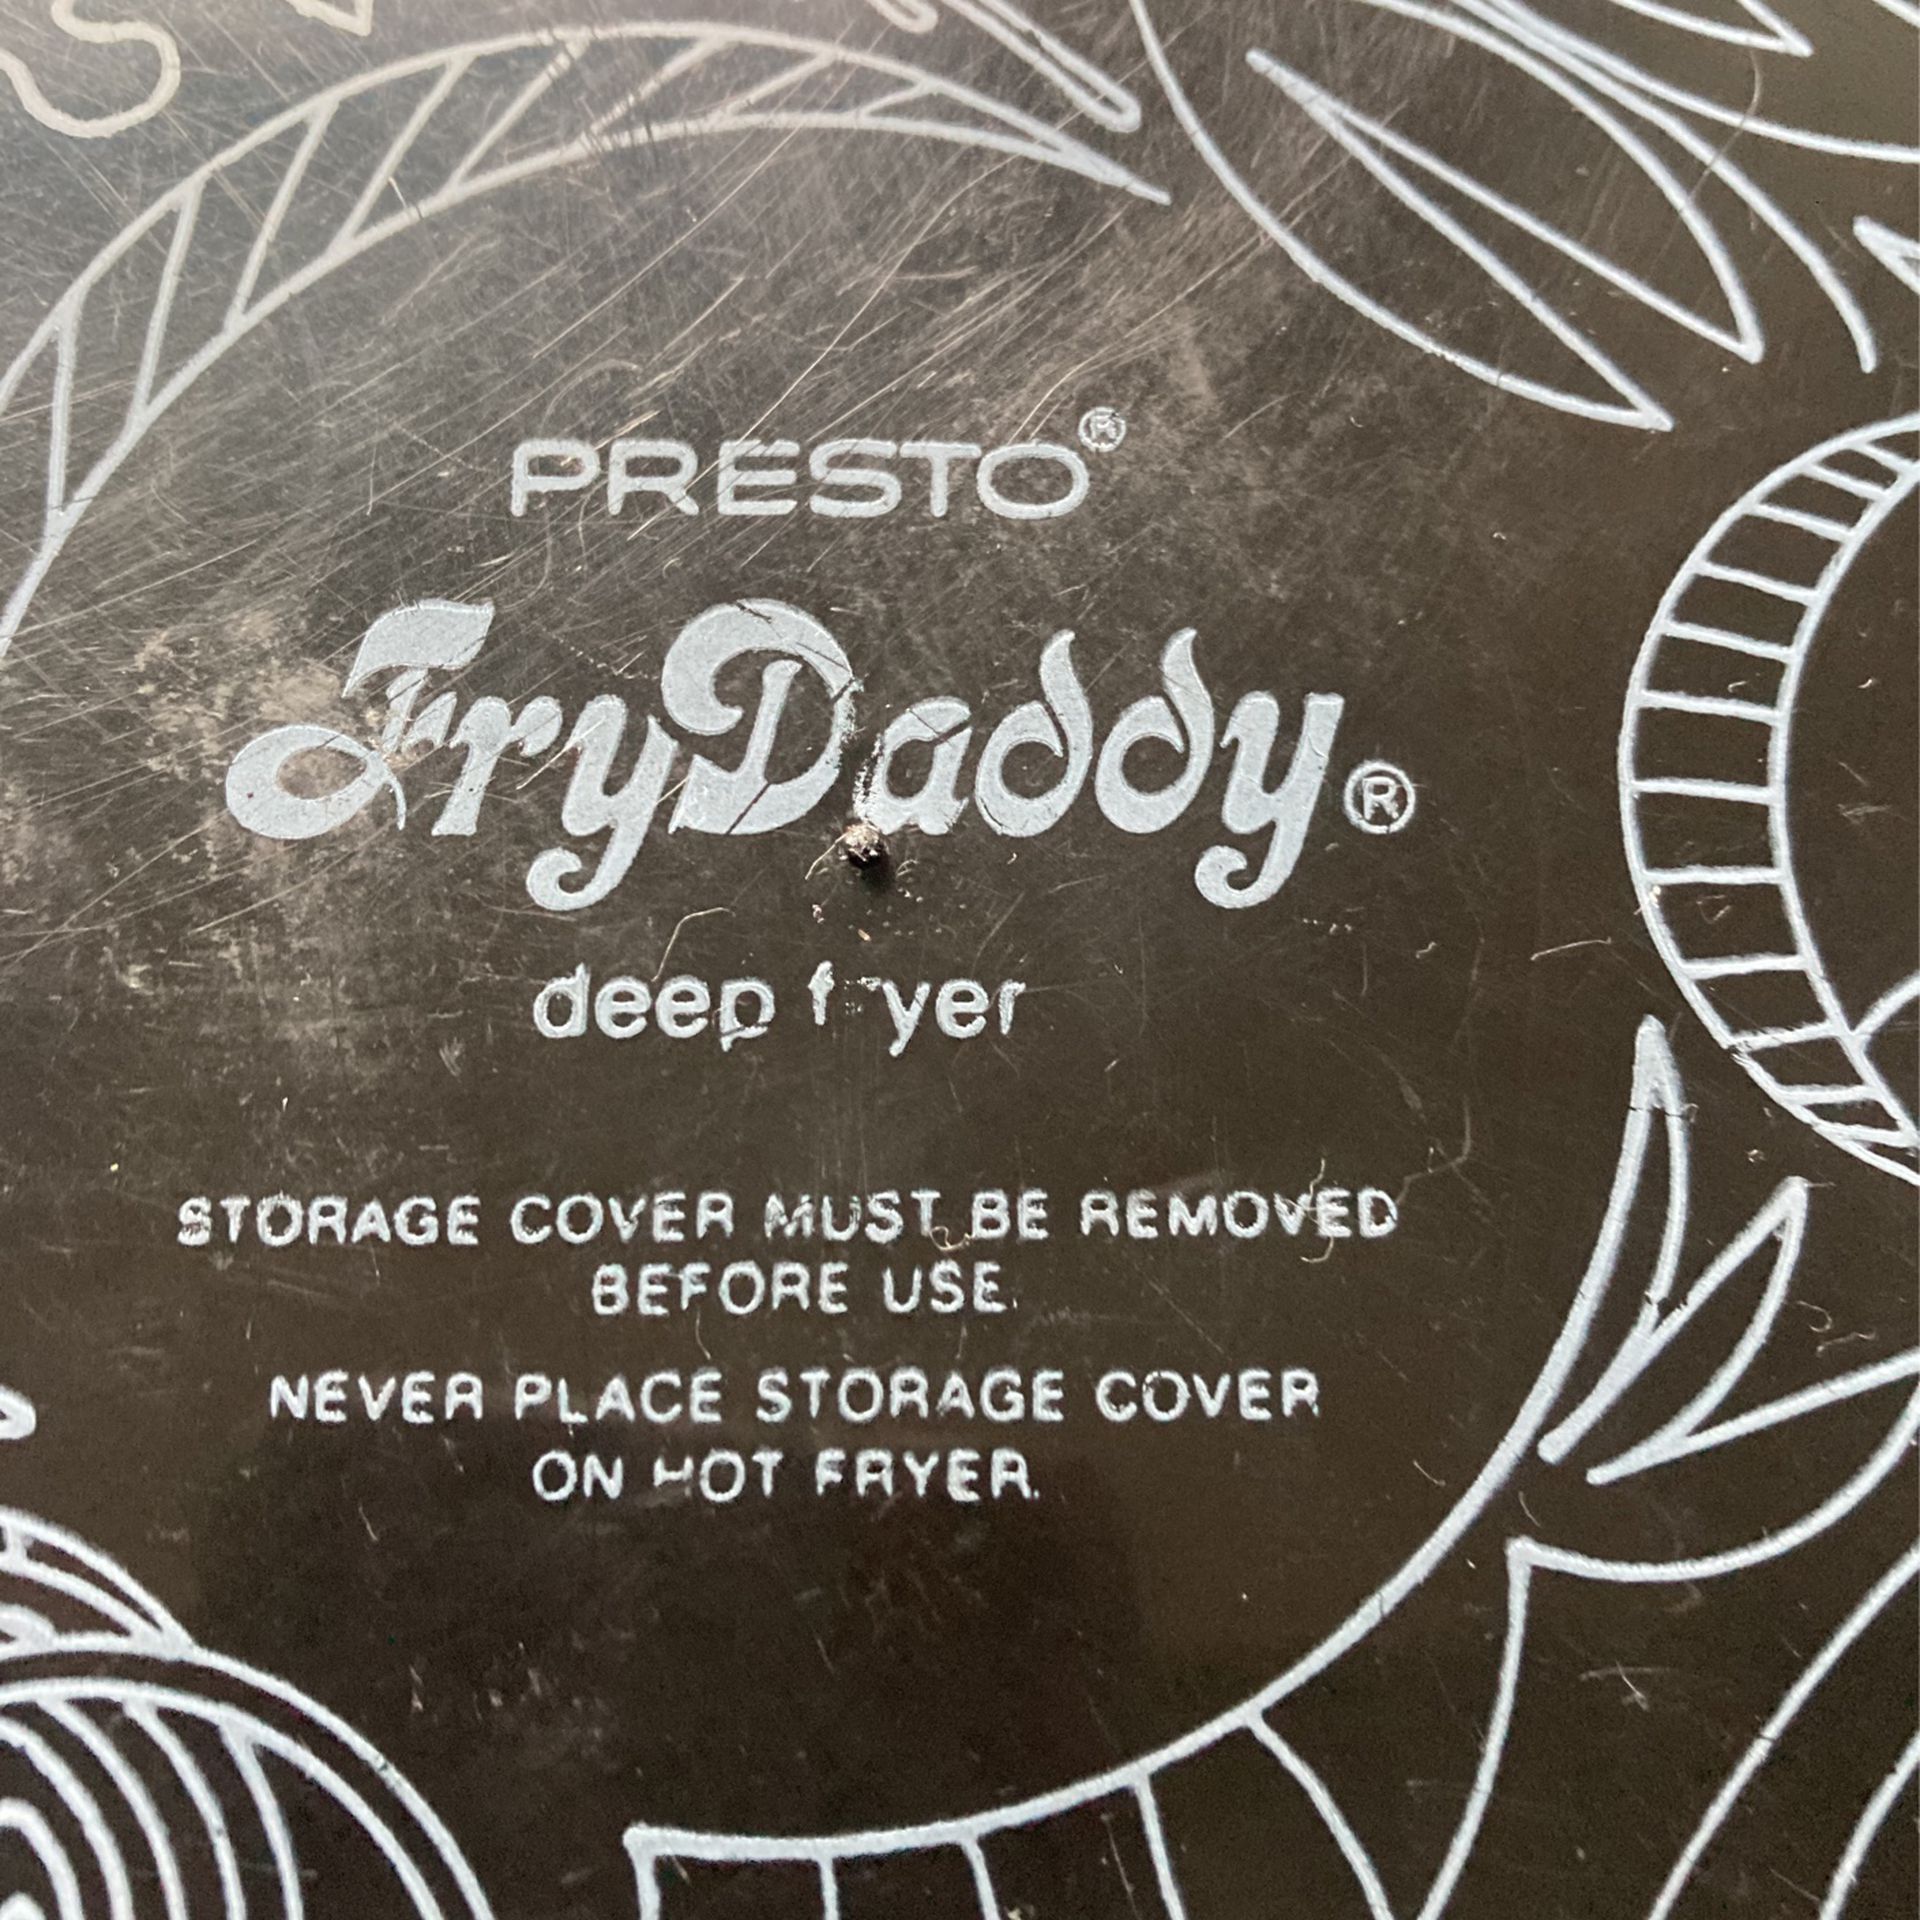 Presto Model Cool Daddy Deep Fryer for Sale in Richmond, CA - OfferUp